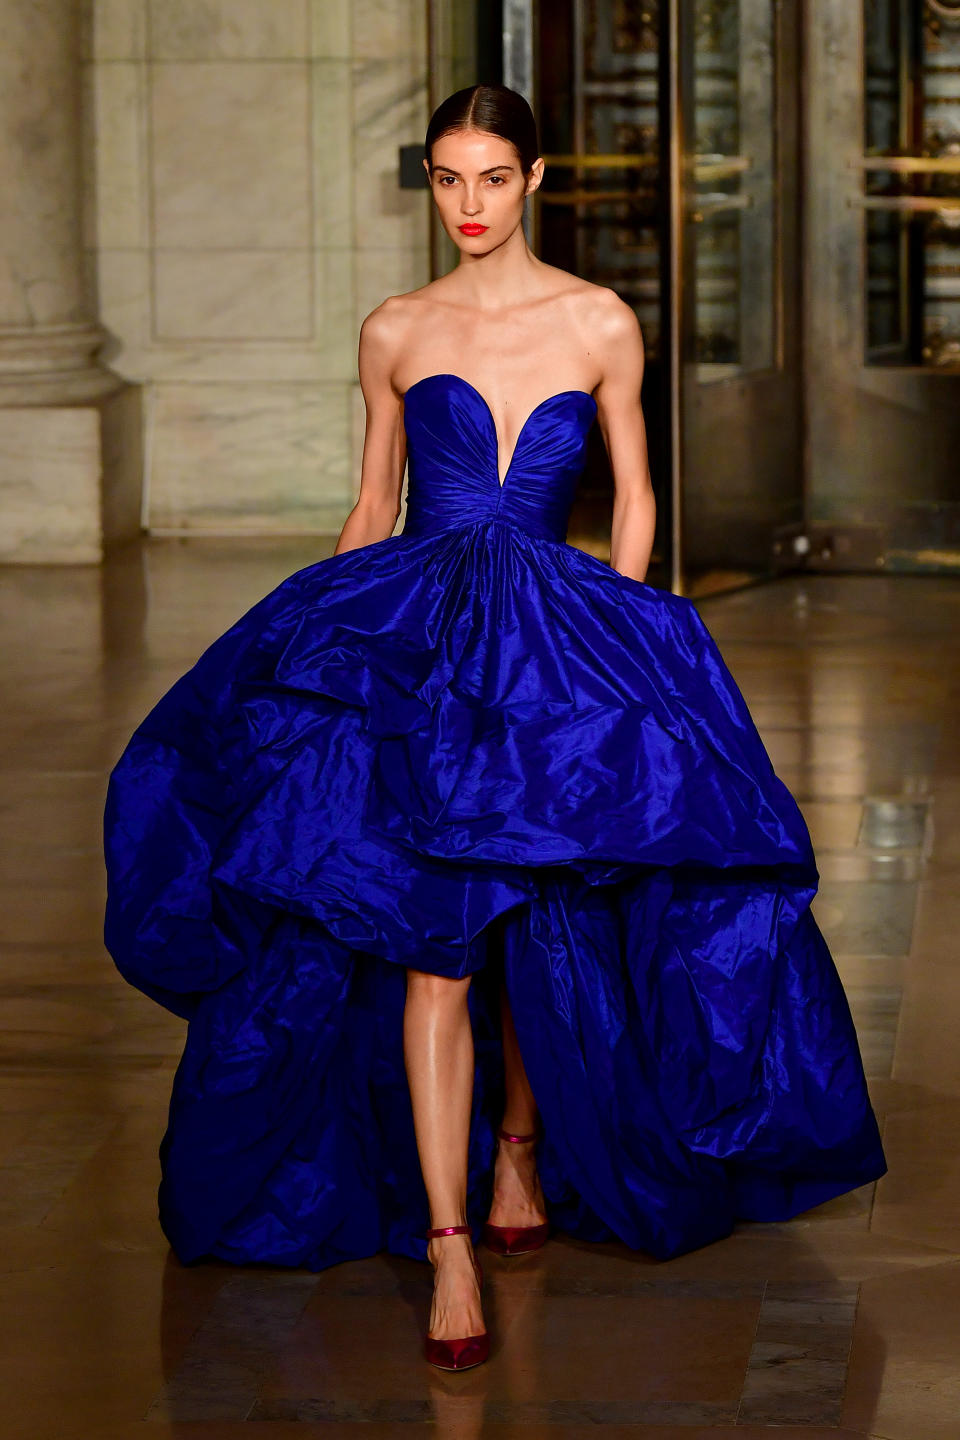 A model walks the runway at the Oscar De La Renta show during New York Fashion Week on Feb. 10.